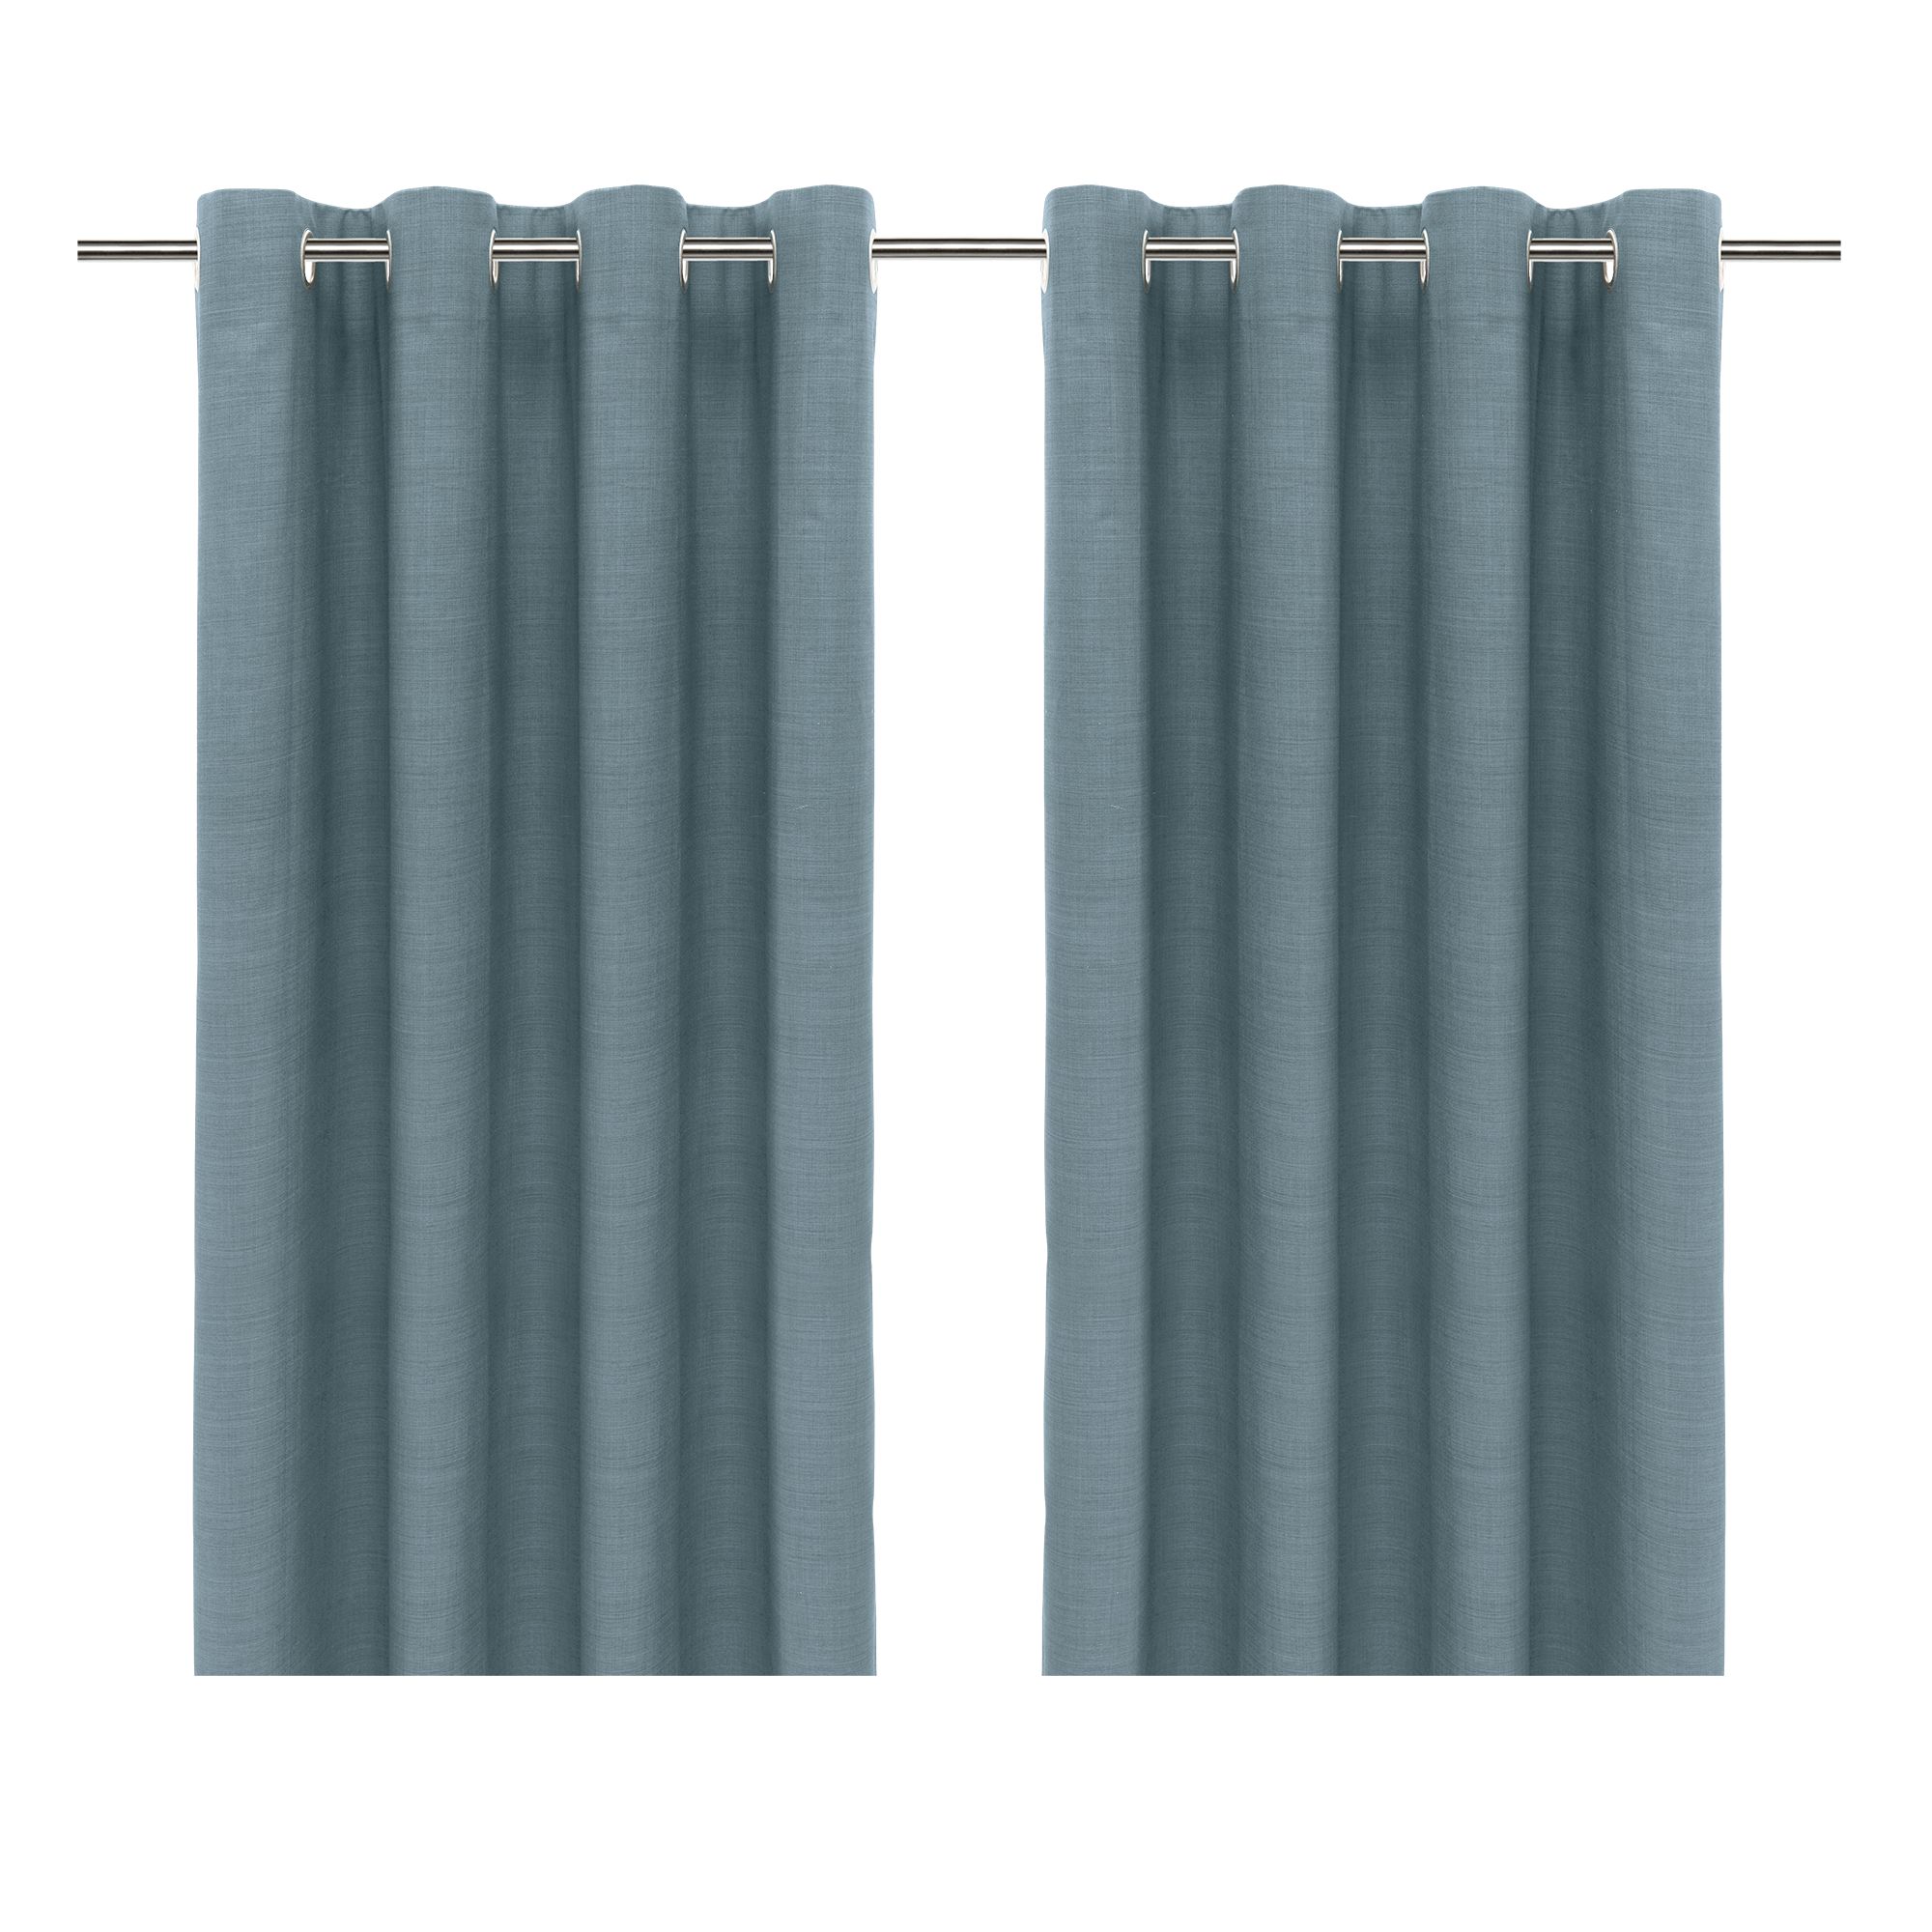 Glend Light blue Plain woven Blackout & thermal Eyelet Curtain (W)167cm (L)183cm, Pair